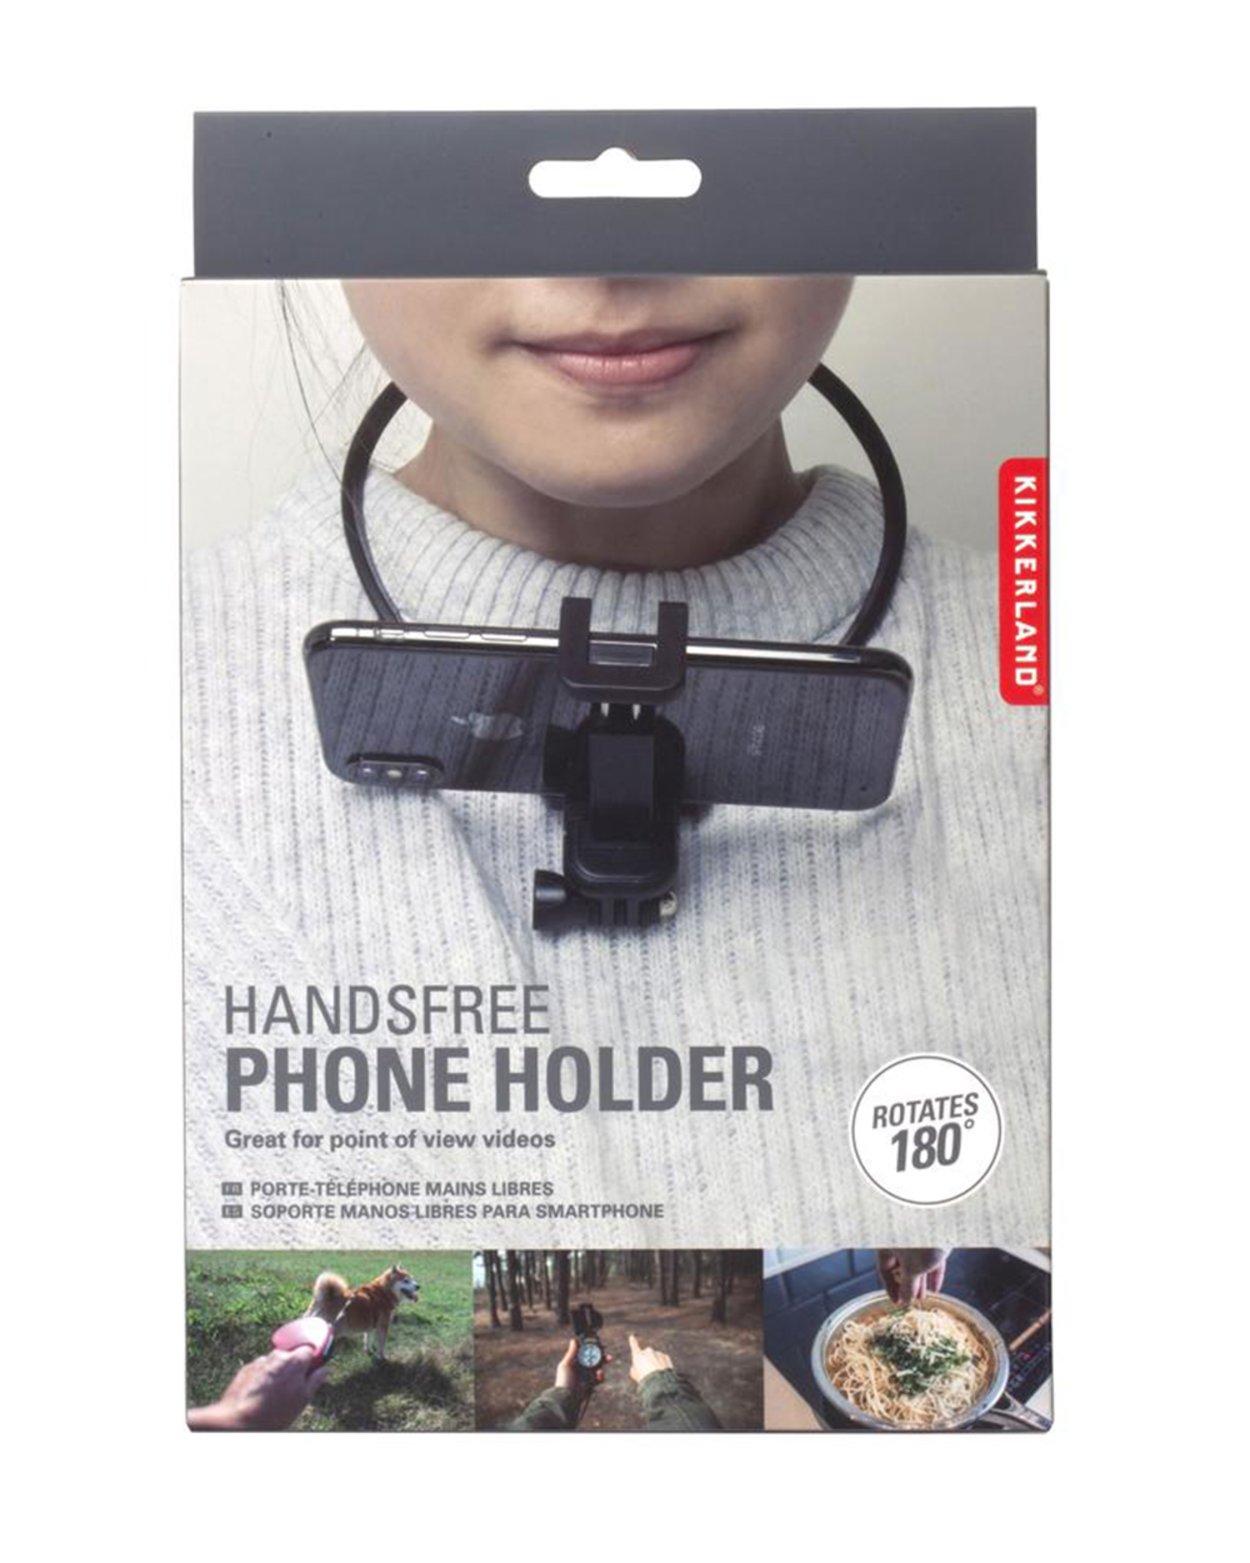 Hands Free Phone Holder